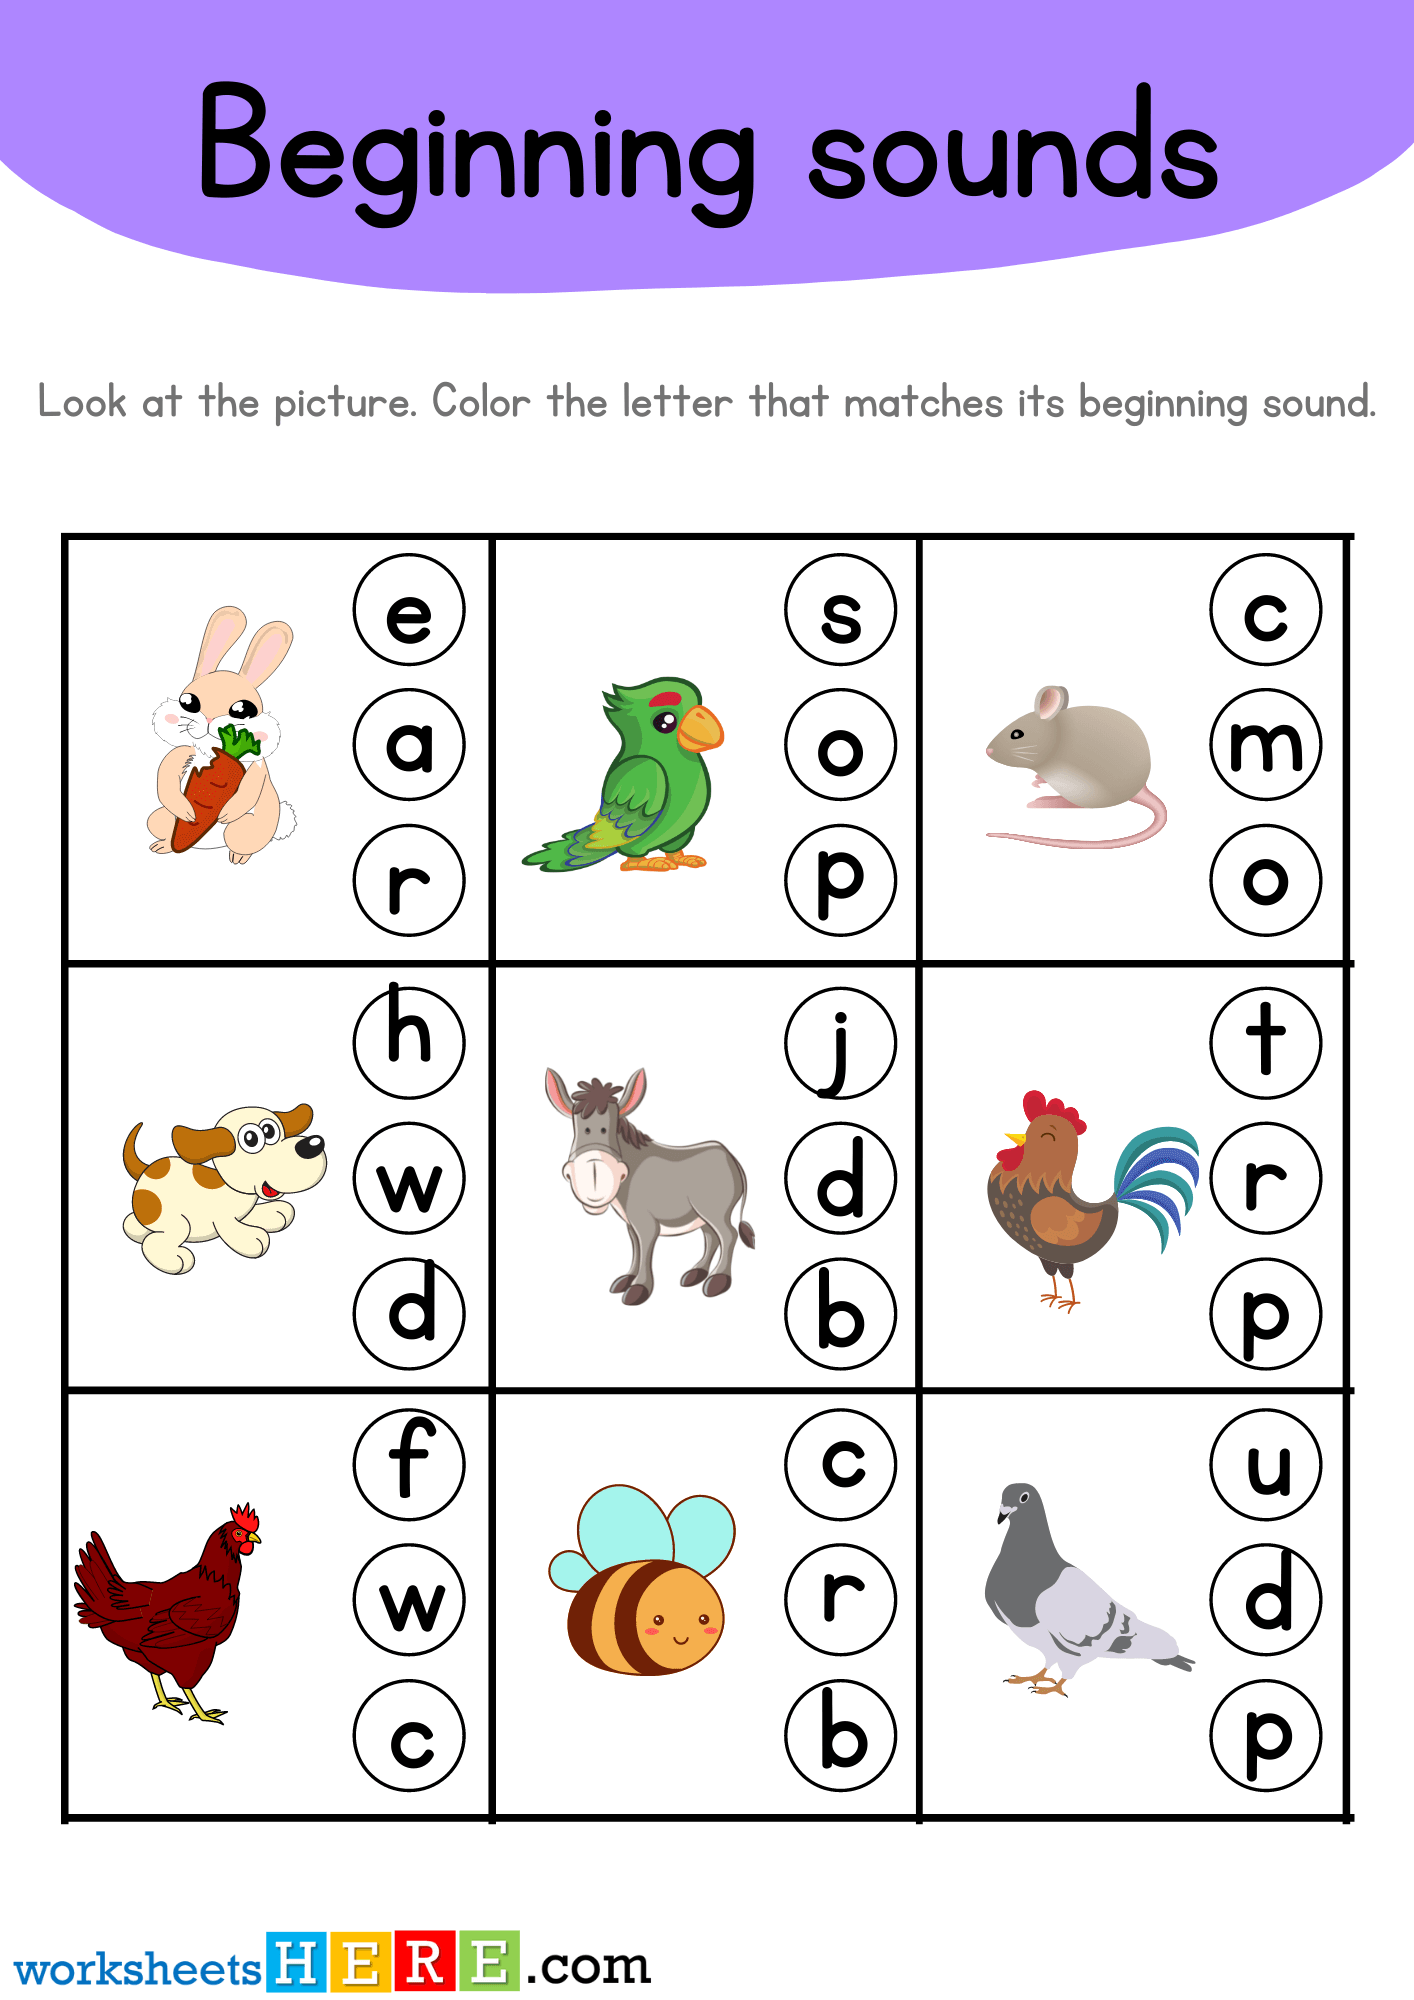 Beginning Sounds PDF Worksheet with Farm Animals, Starting Sound Activity for Kindergarten